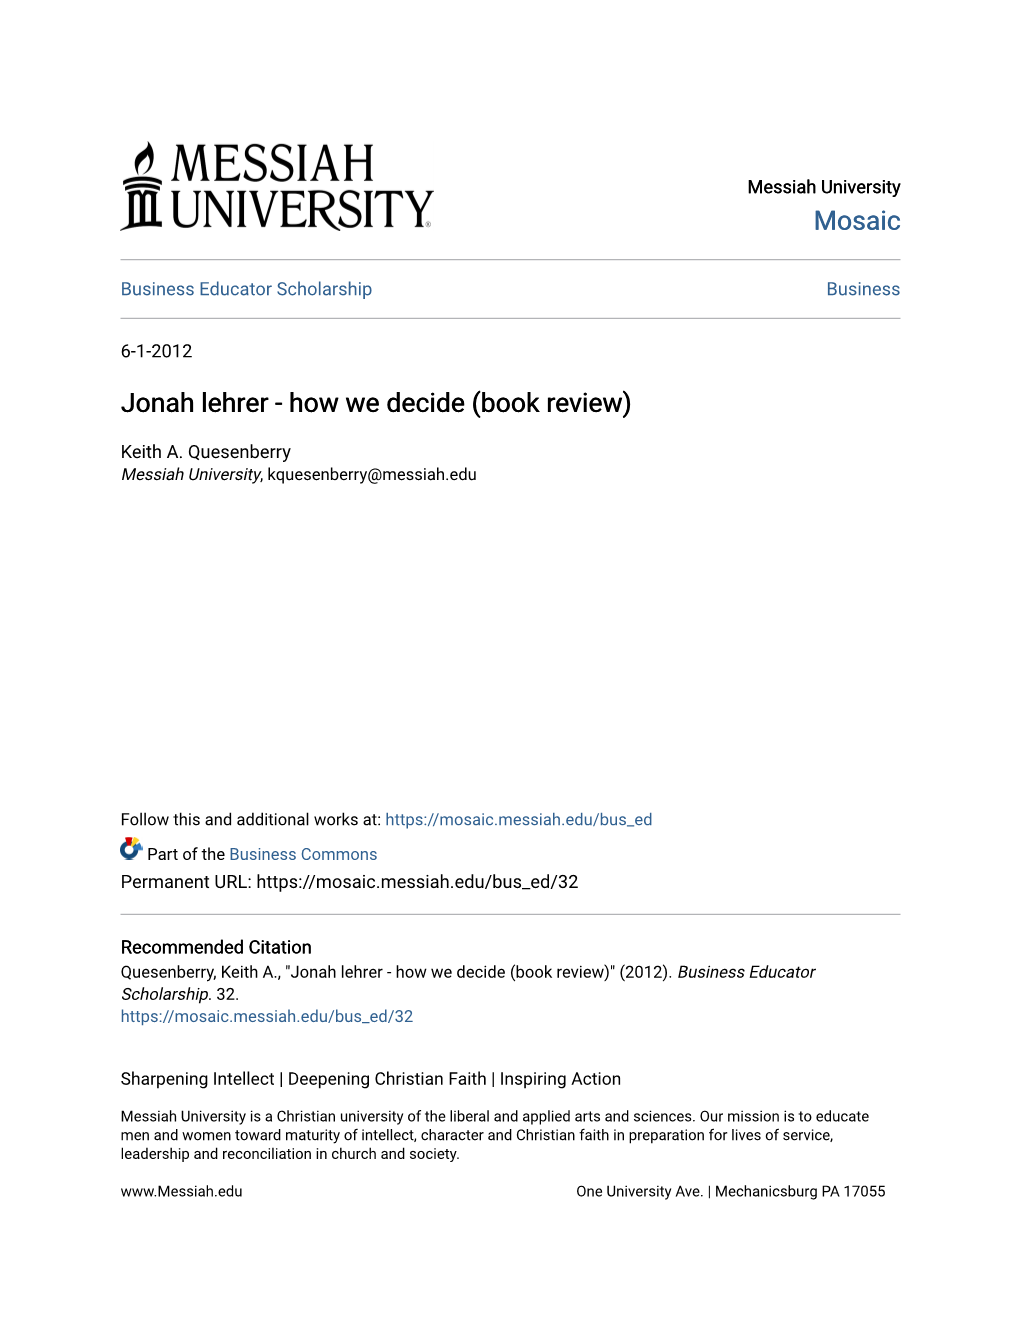 Jonah Lehrer - How We Decide (Book Review)